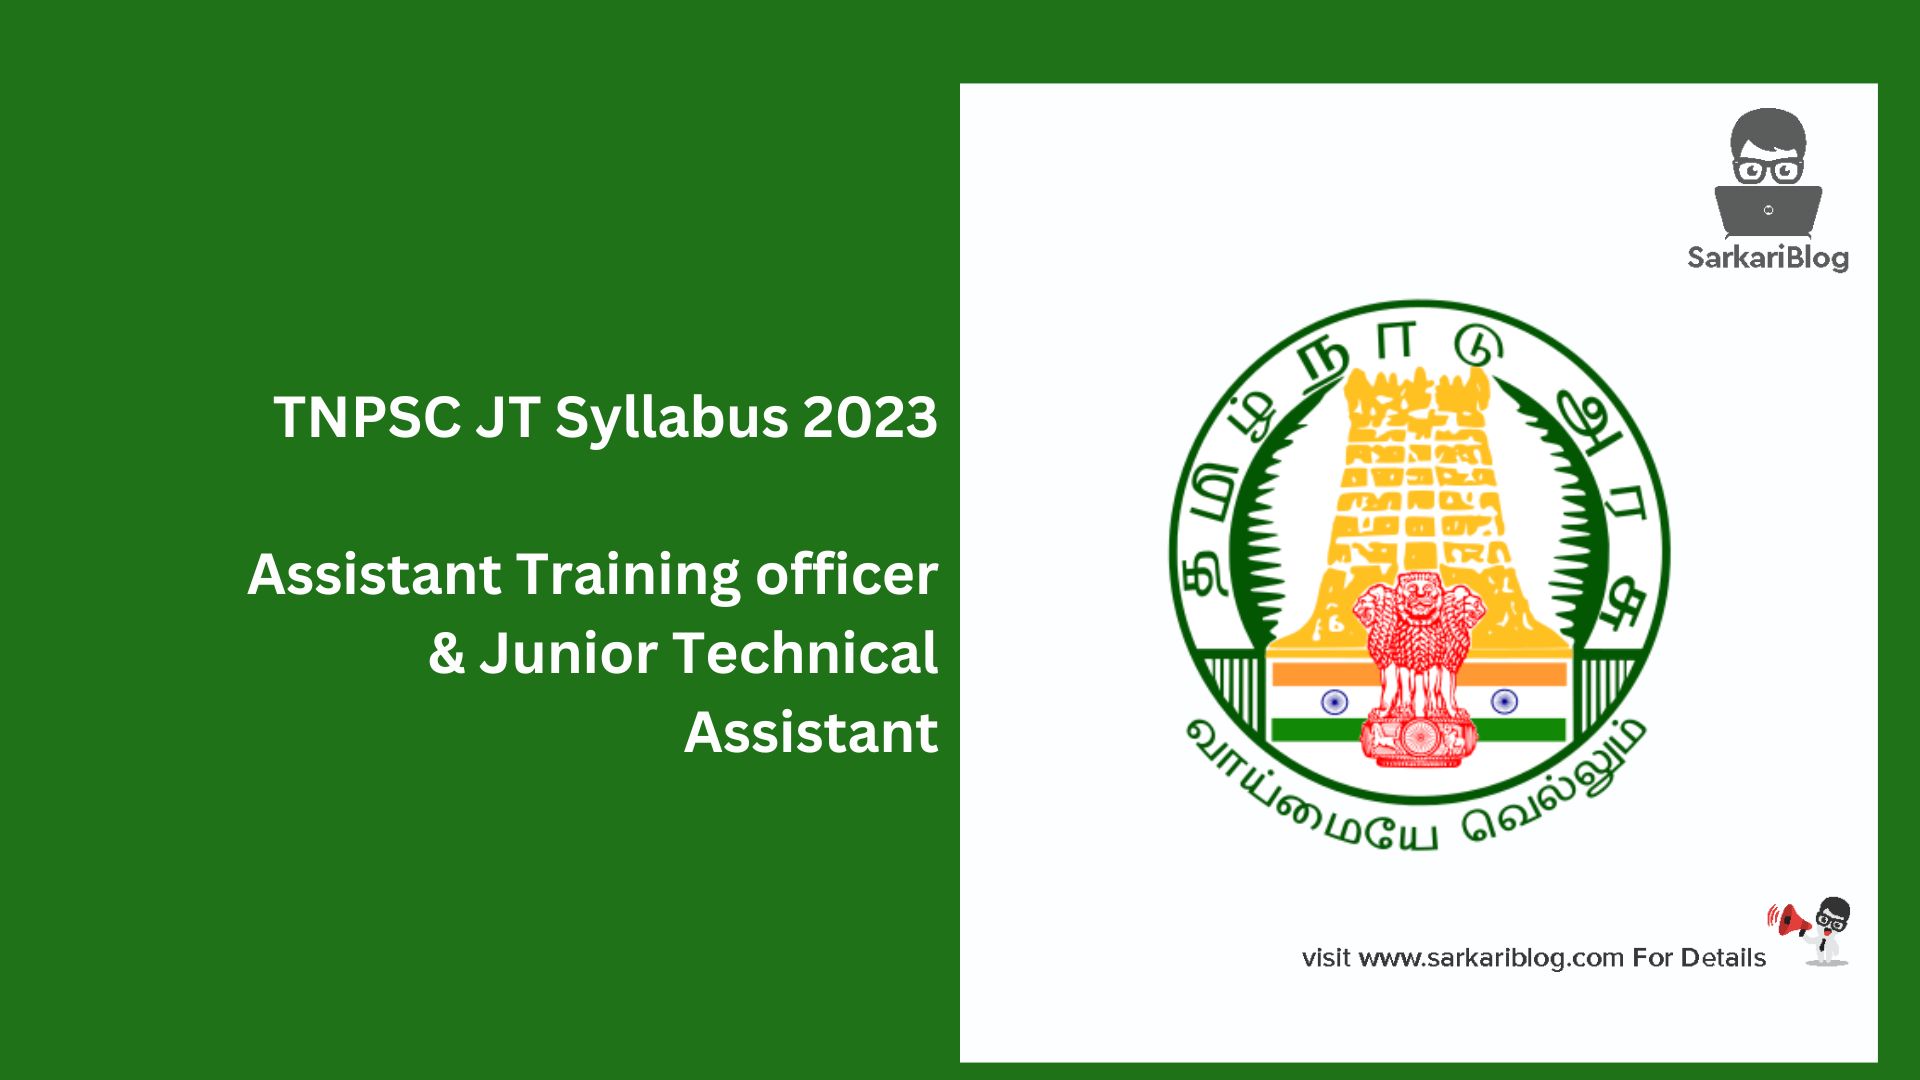 TNPSC JT Syllabus 2023